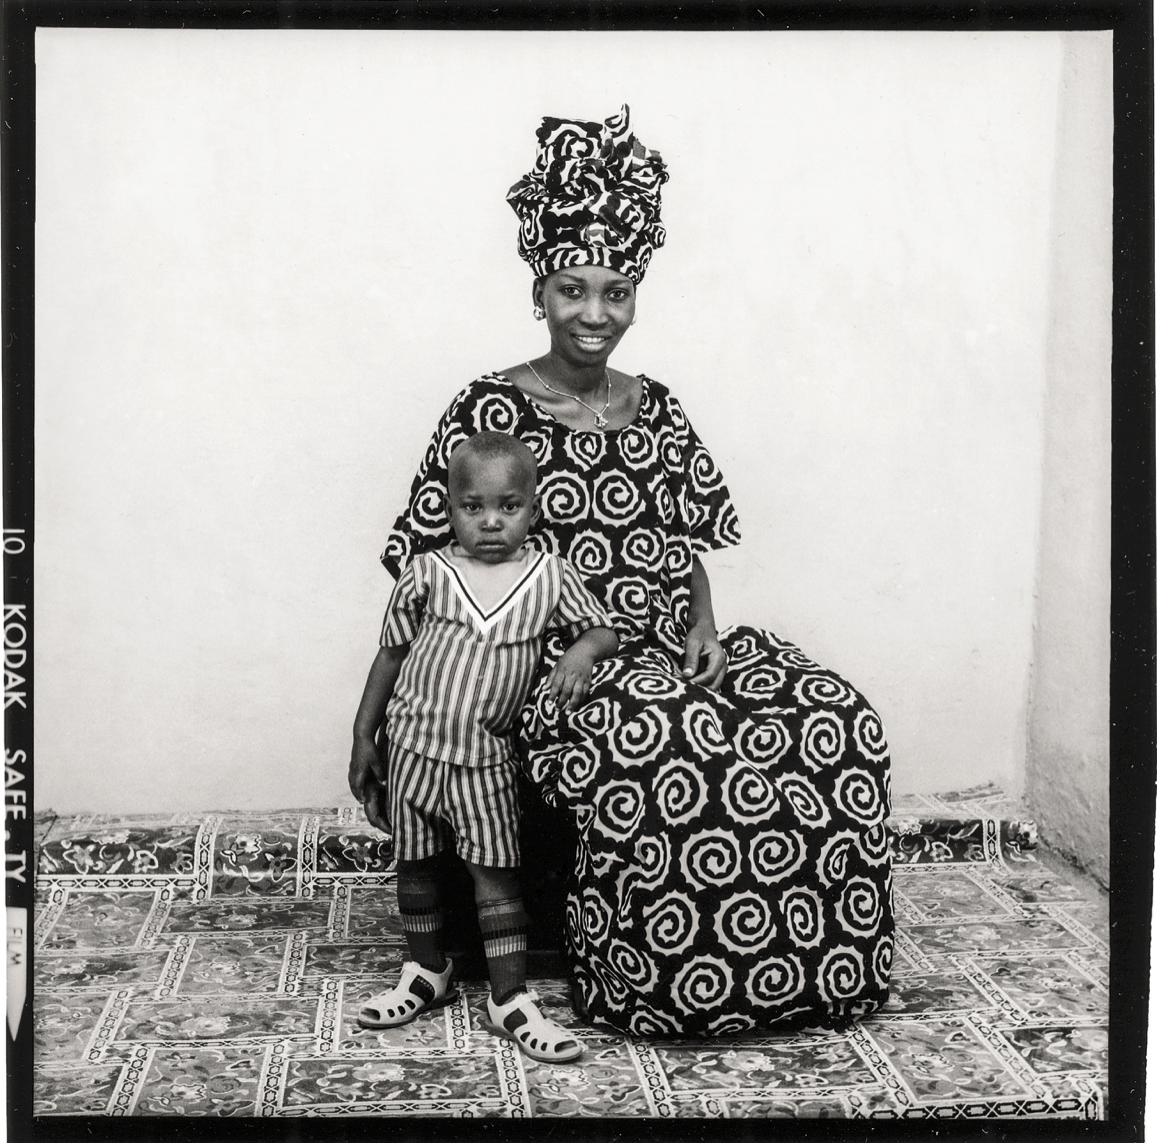 Malick Sidibé, Photograph from the Mali Twist Exhibition https://loeildelaphotographie.com/en/event/malick-sidibe-mali-twist/  